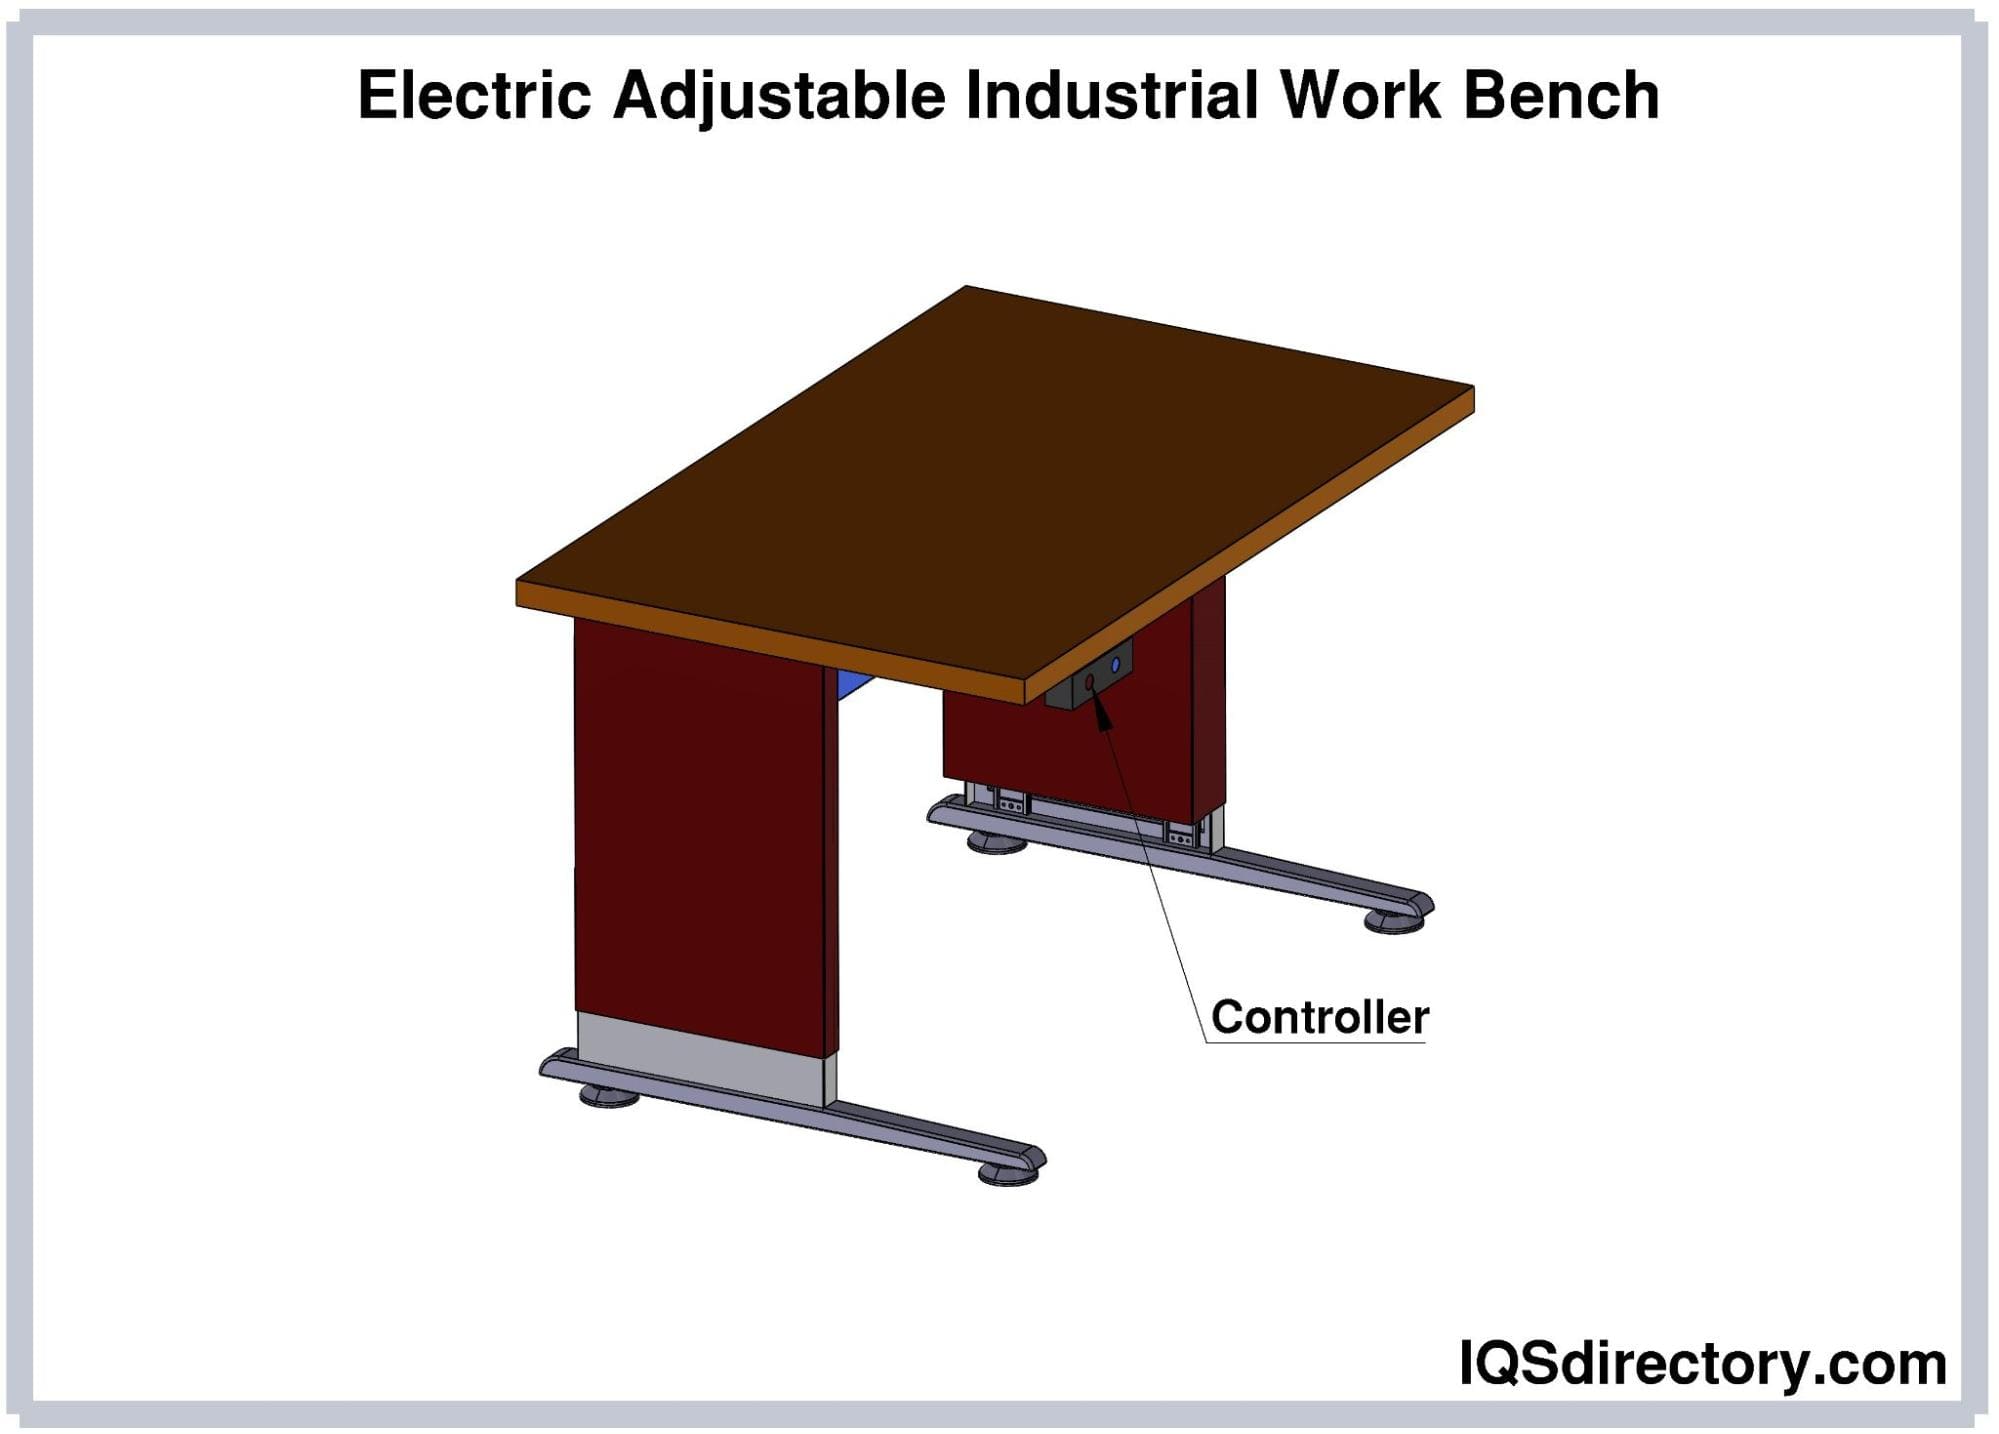 Electric Adjustable Industrial Work Bench